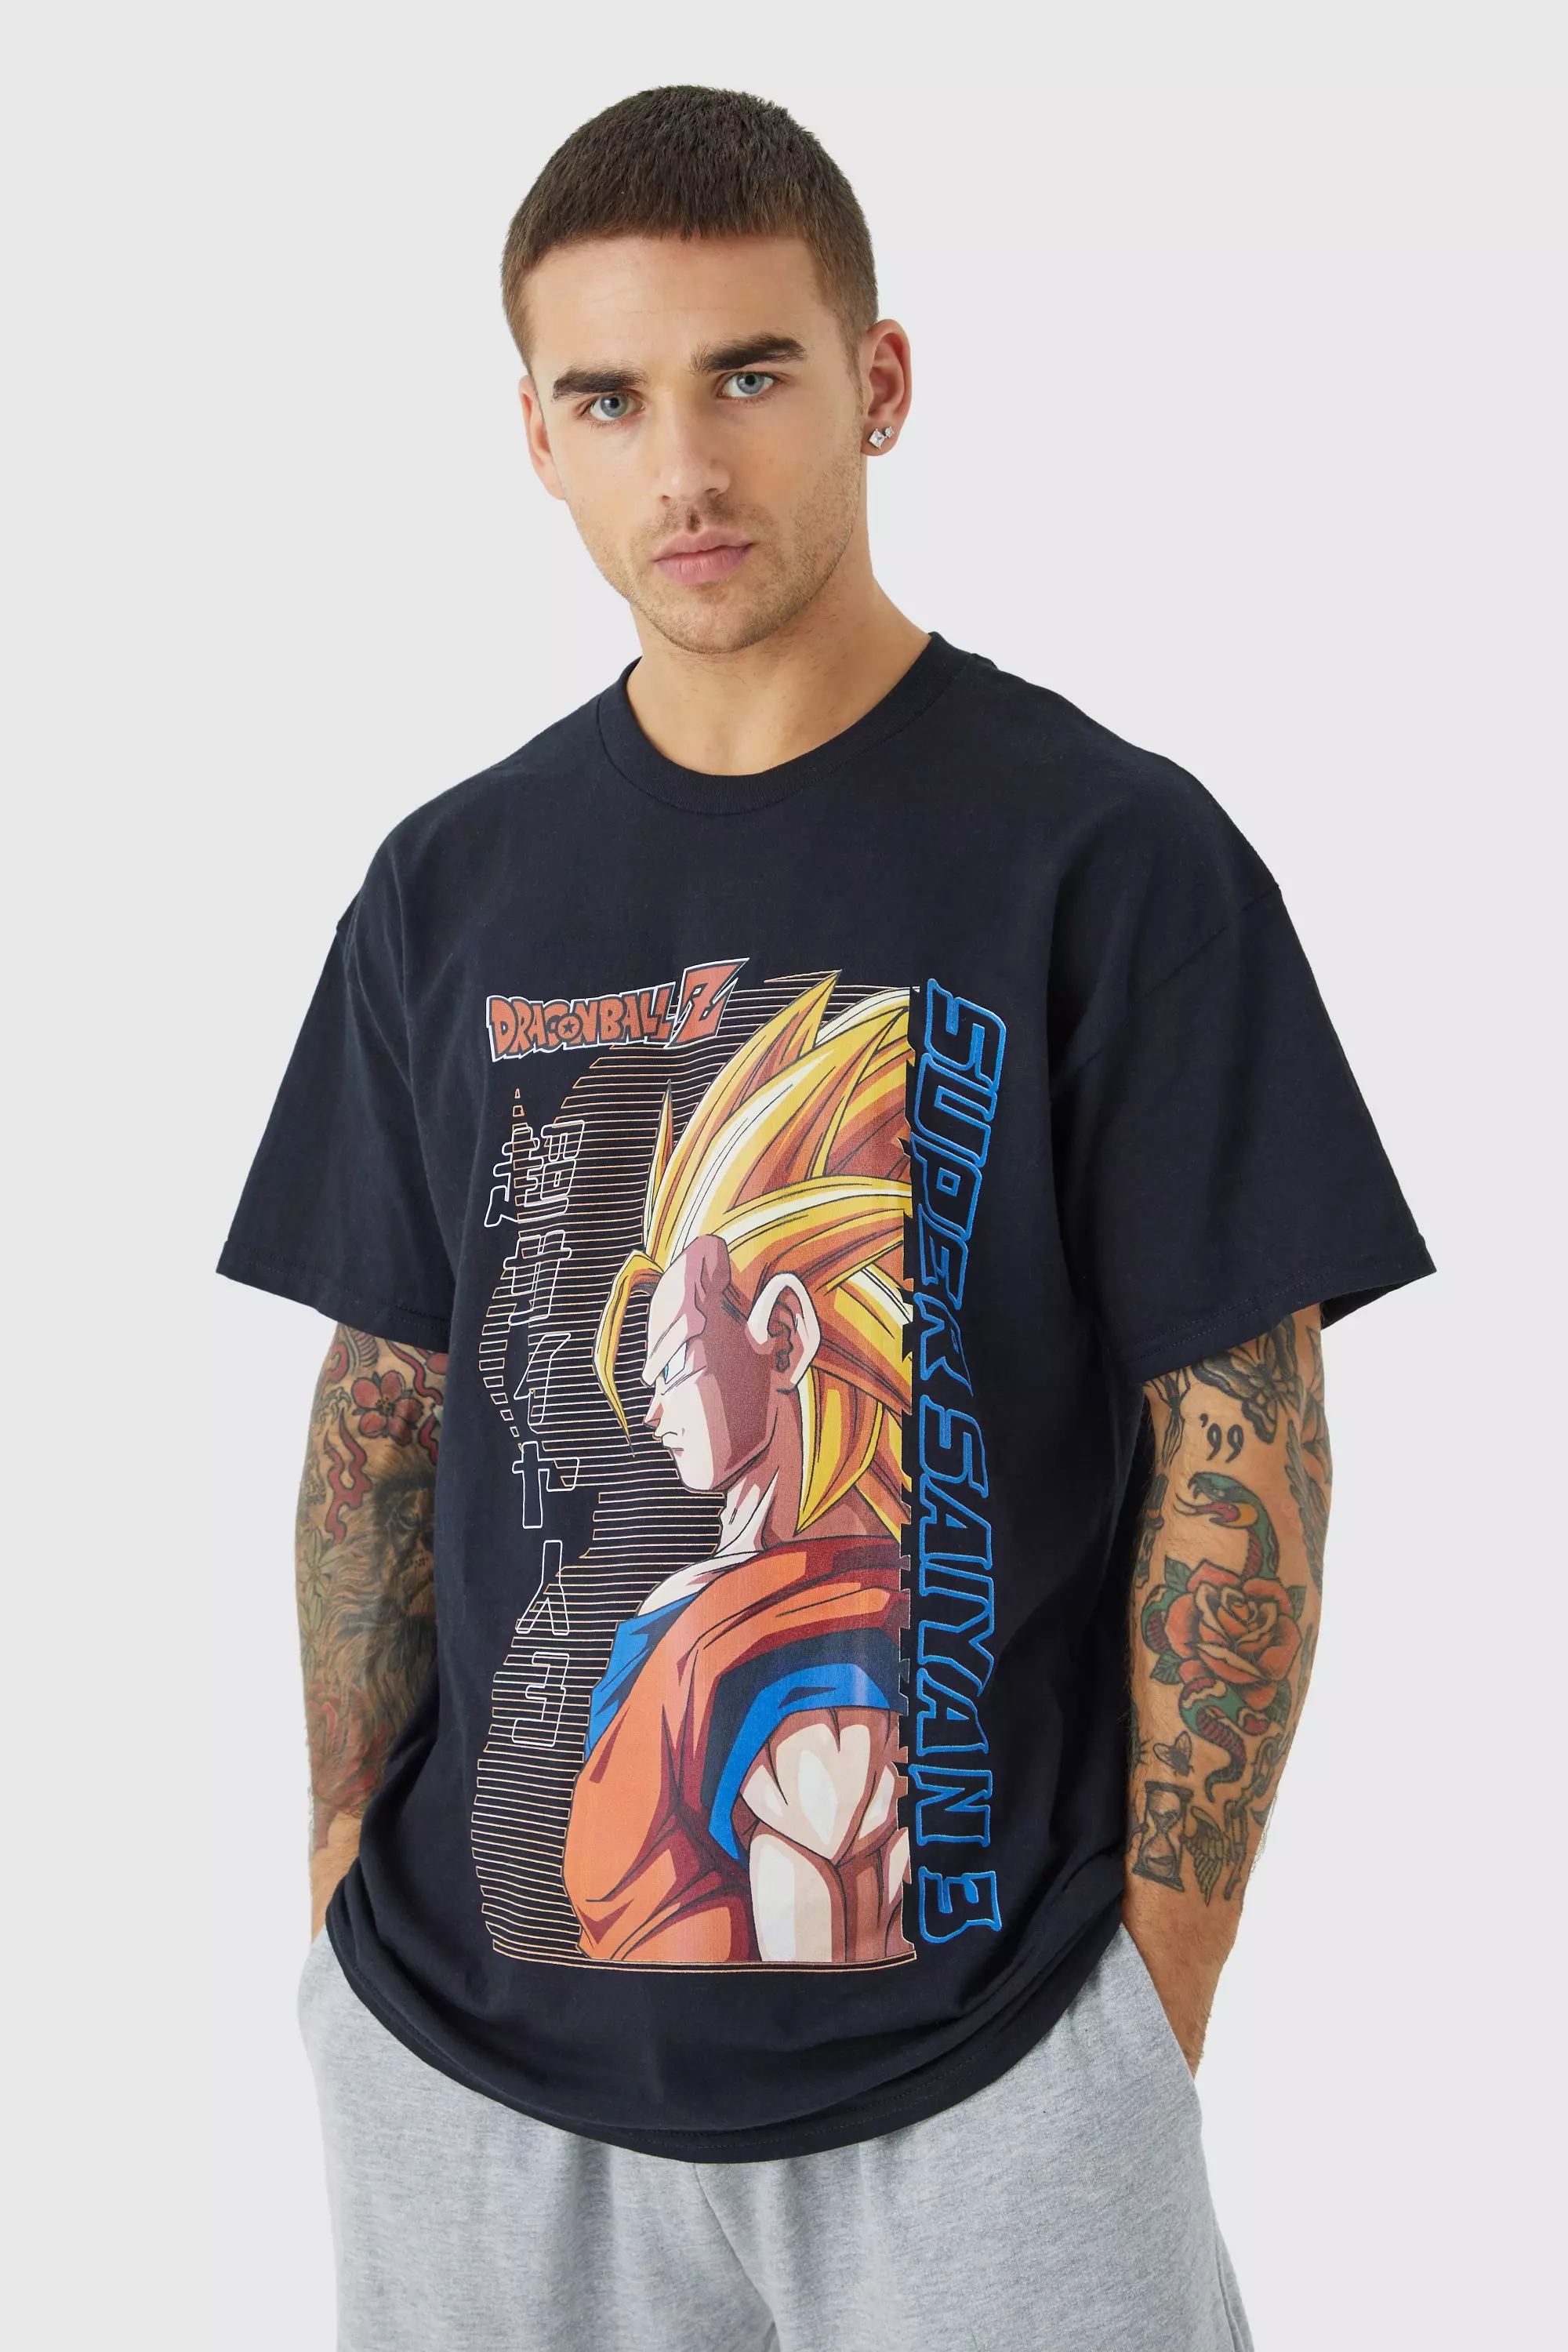 New Ambatukam Dreamybull Buss desert T-Shirt tees Short sleeve customized t  shirts man clothes mens graphic t-shirts anime